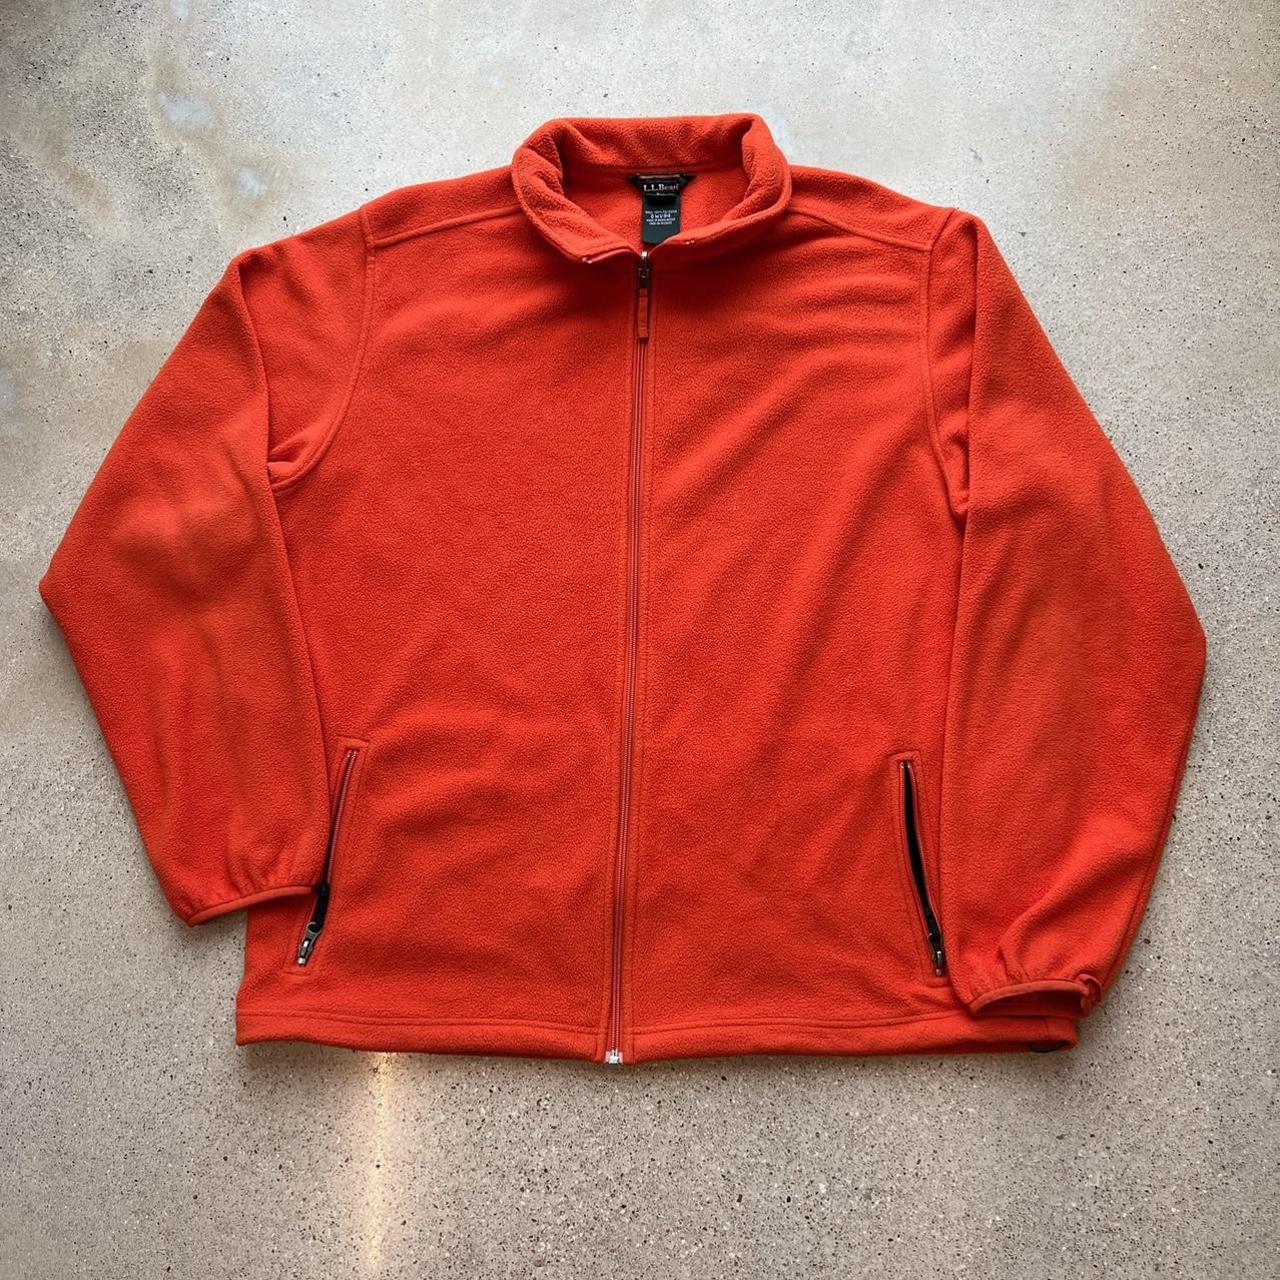 L.L.Bean Men's Orange Jacket